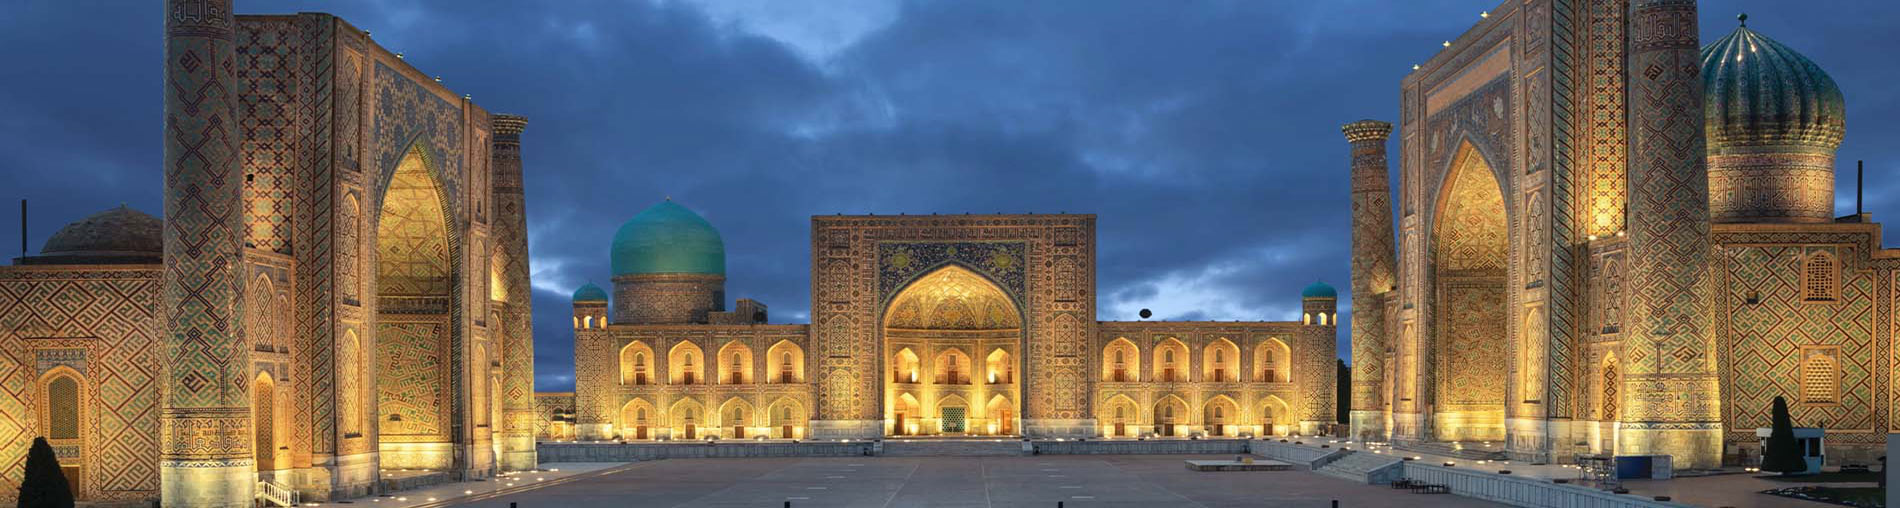 Tashkent, Uzbekistan Tour Package From India